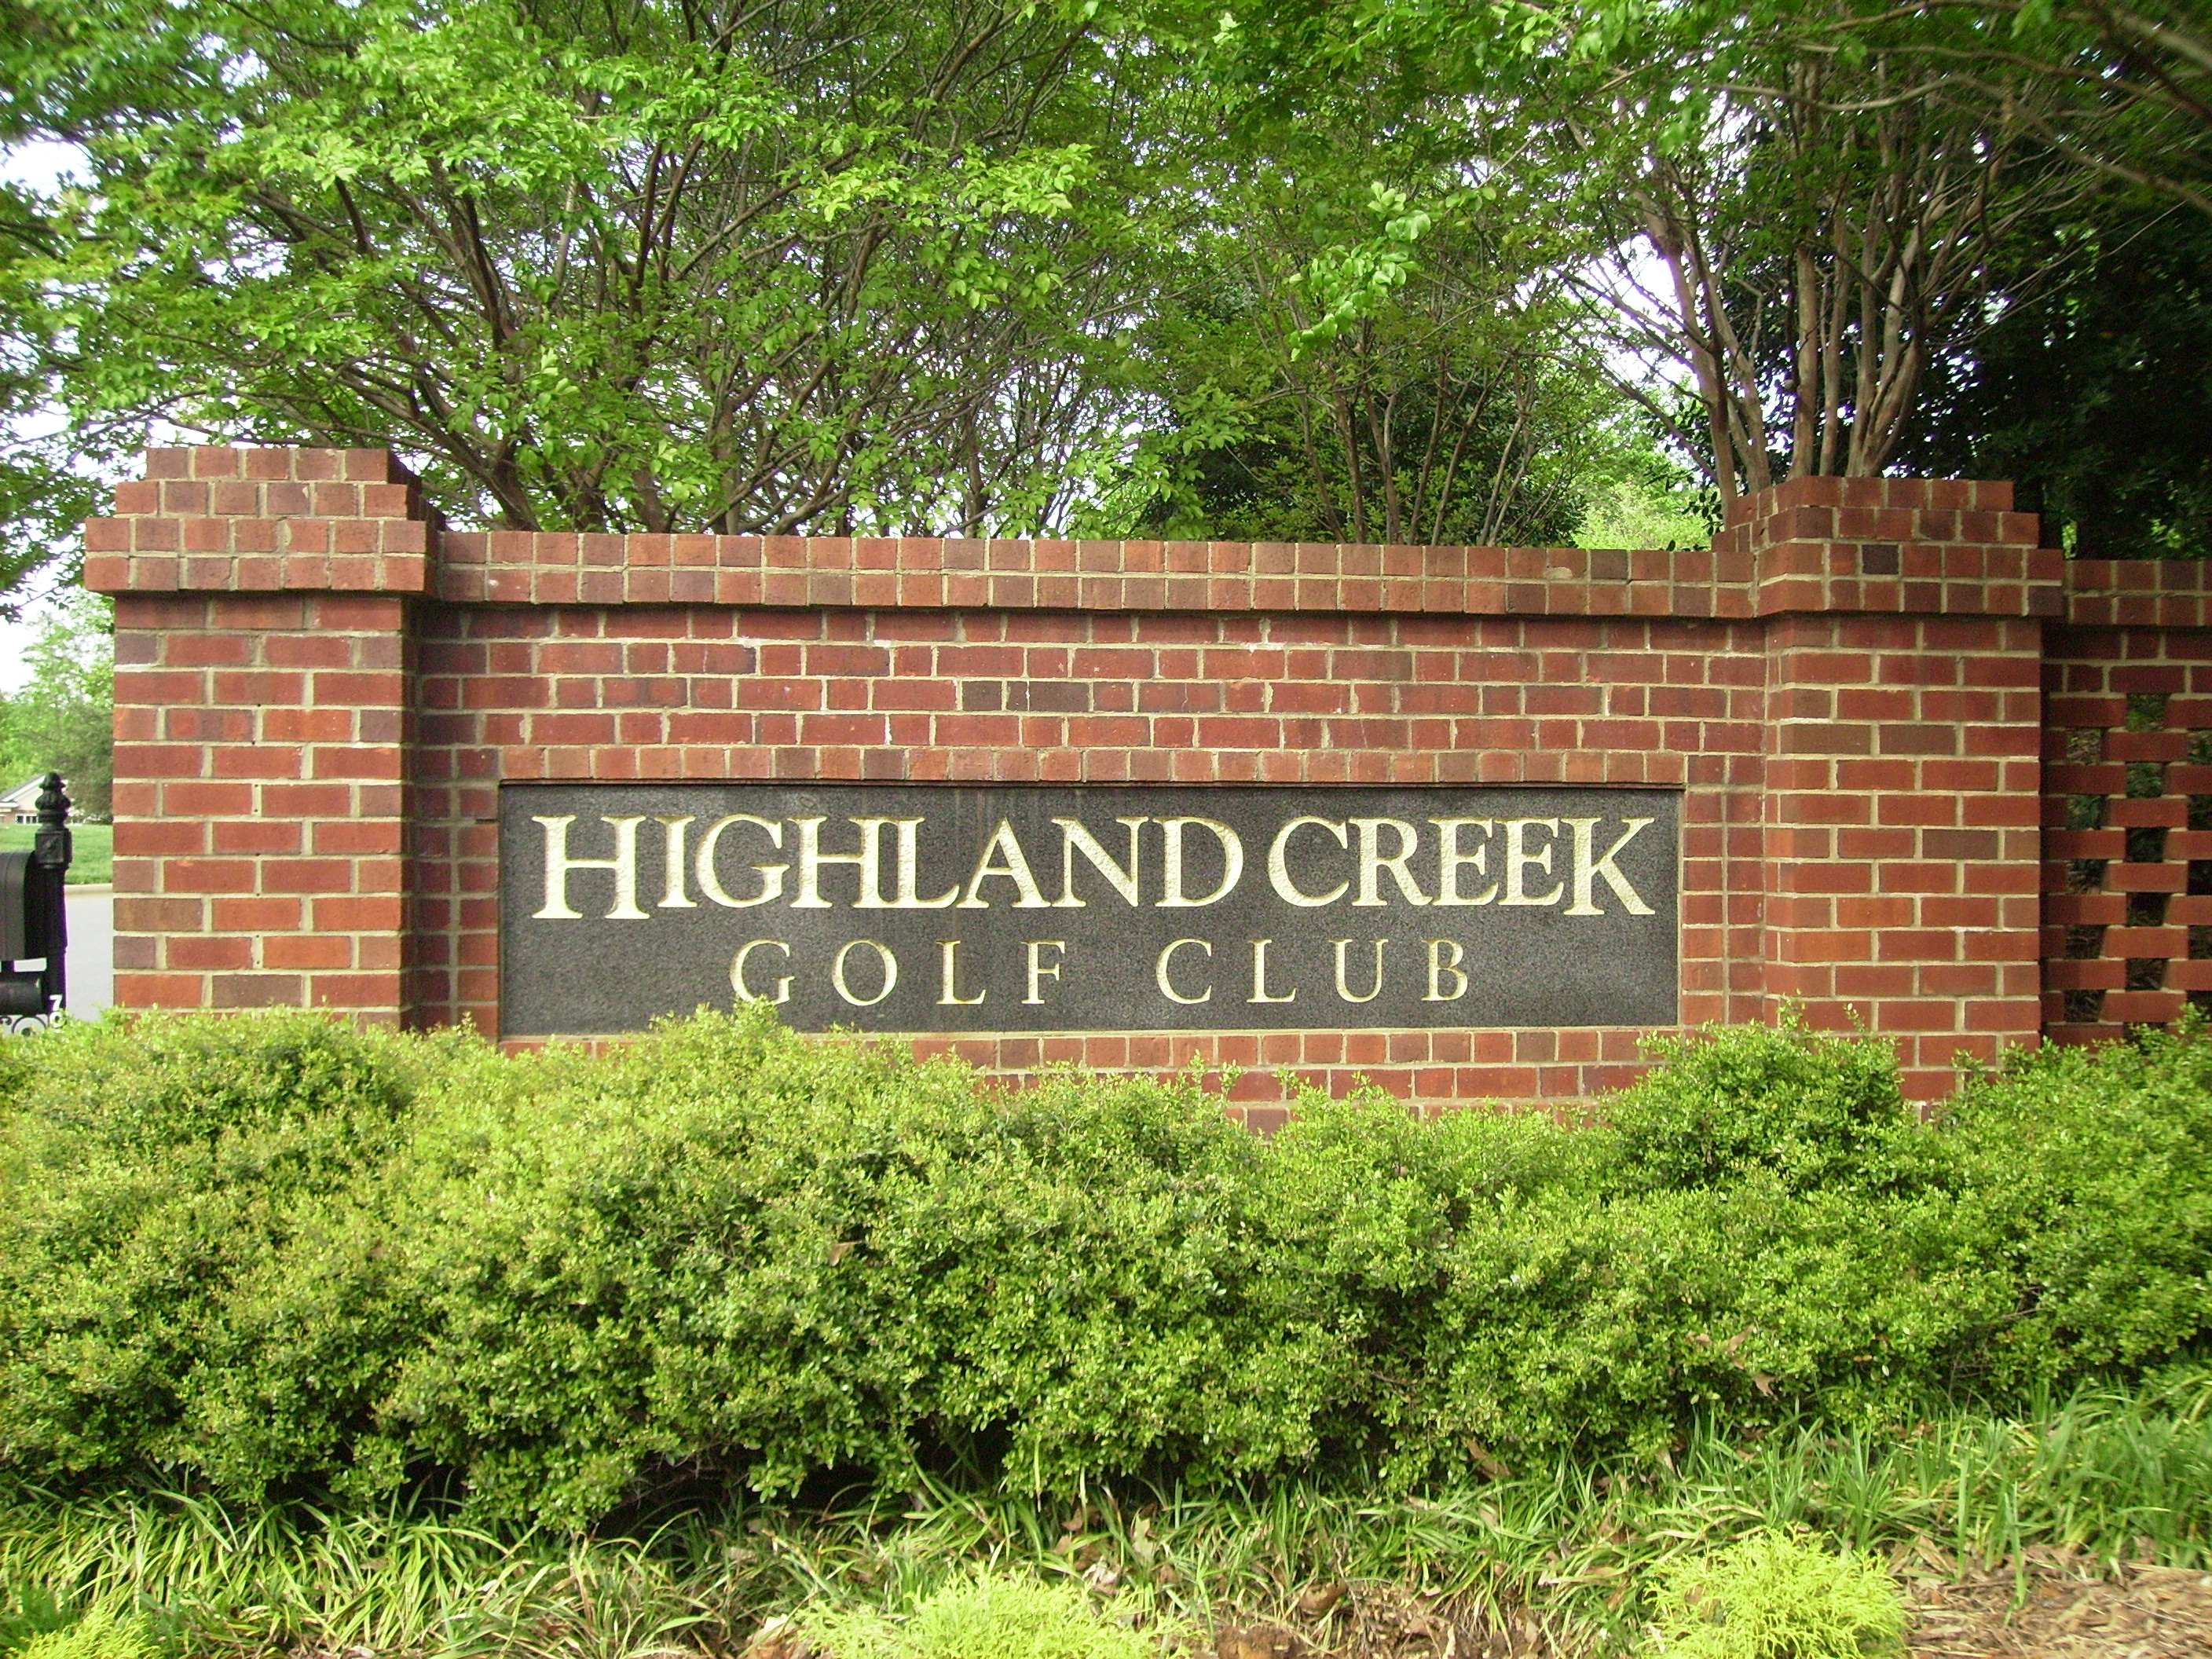 File:Highland Creek Golf Club, entrance sign.jpg - Wikipedia